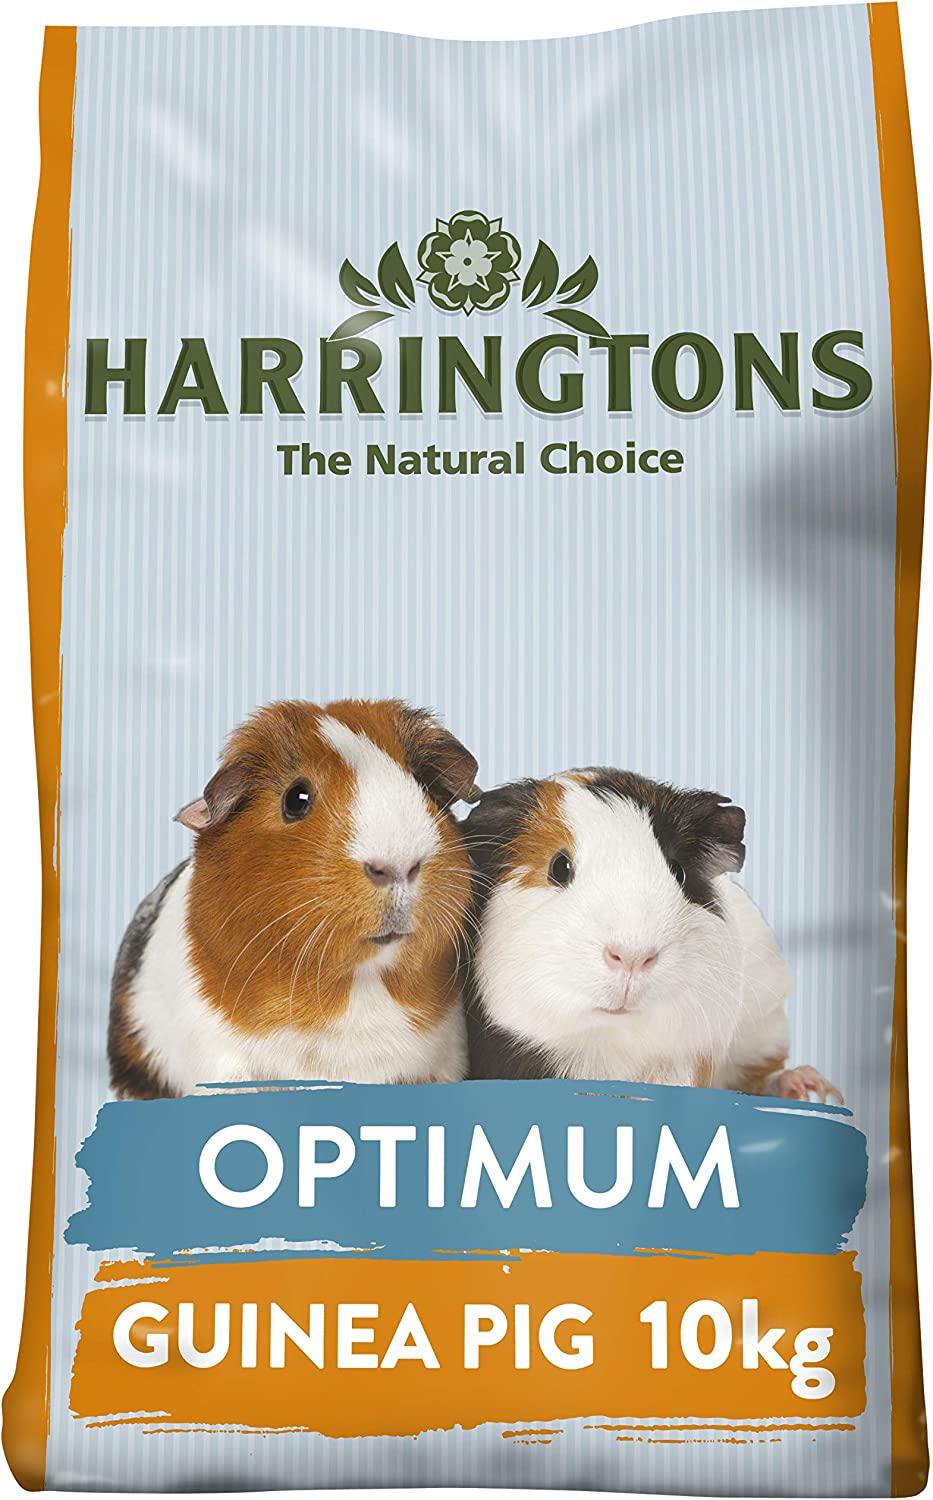 Harringtons Optimum Guinea Pig Food